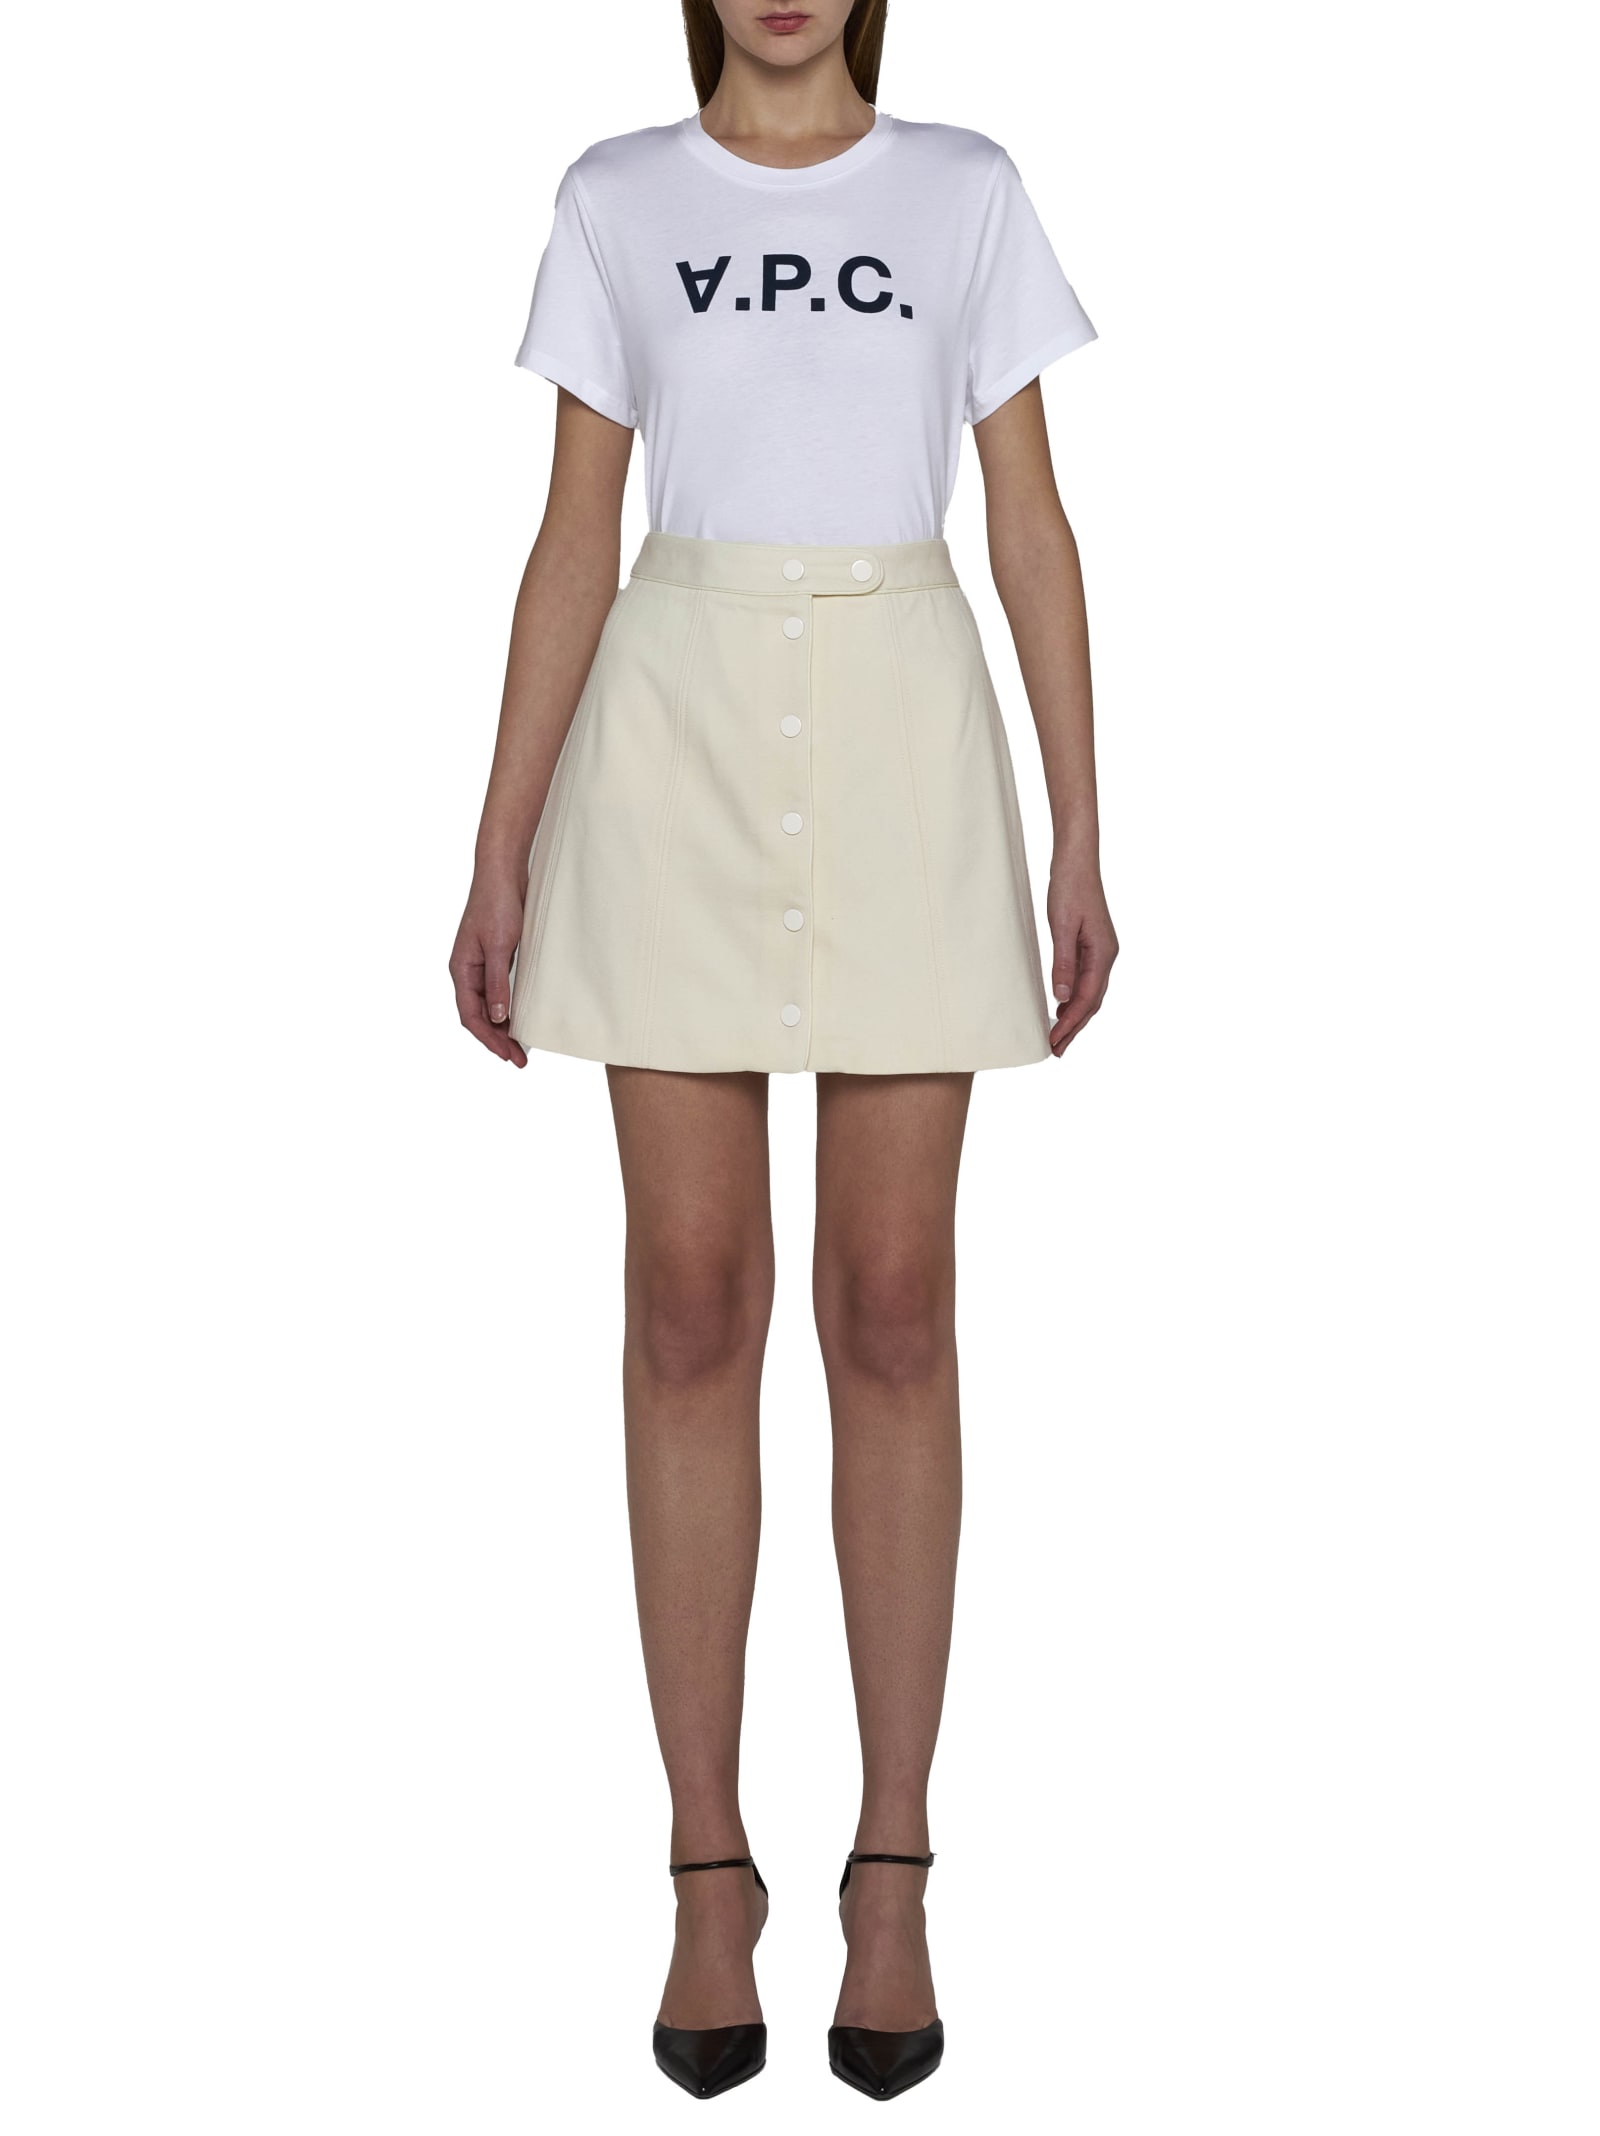 Shop Apc T-shirt In Dark Navy